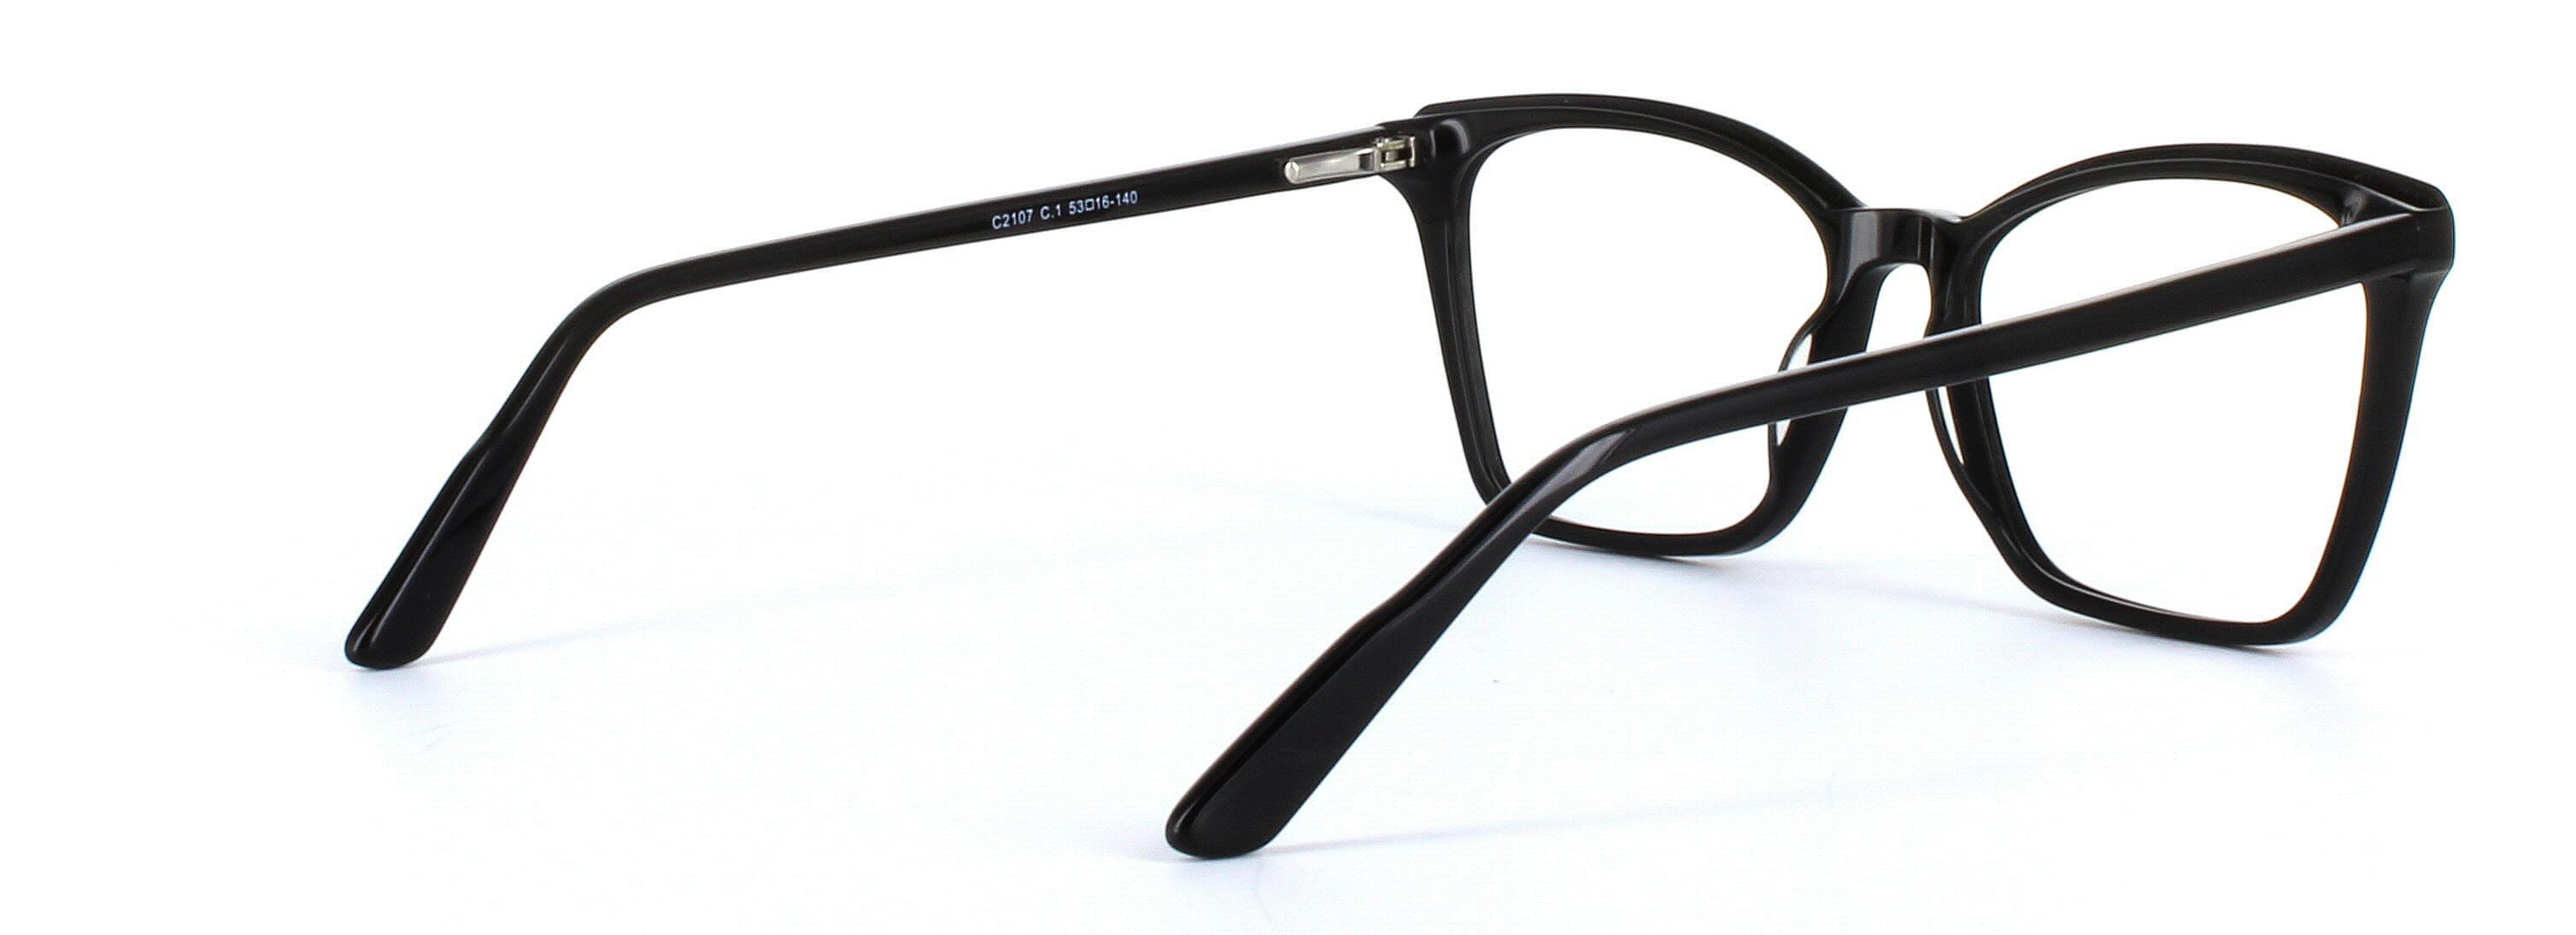 Caelan Black Full Rim Square Plastic Glasses - Image View 4